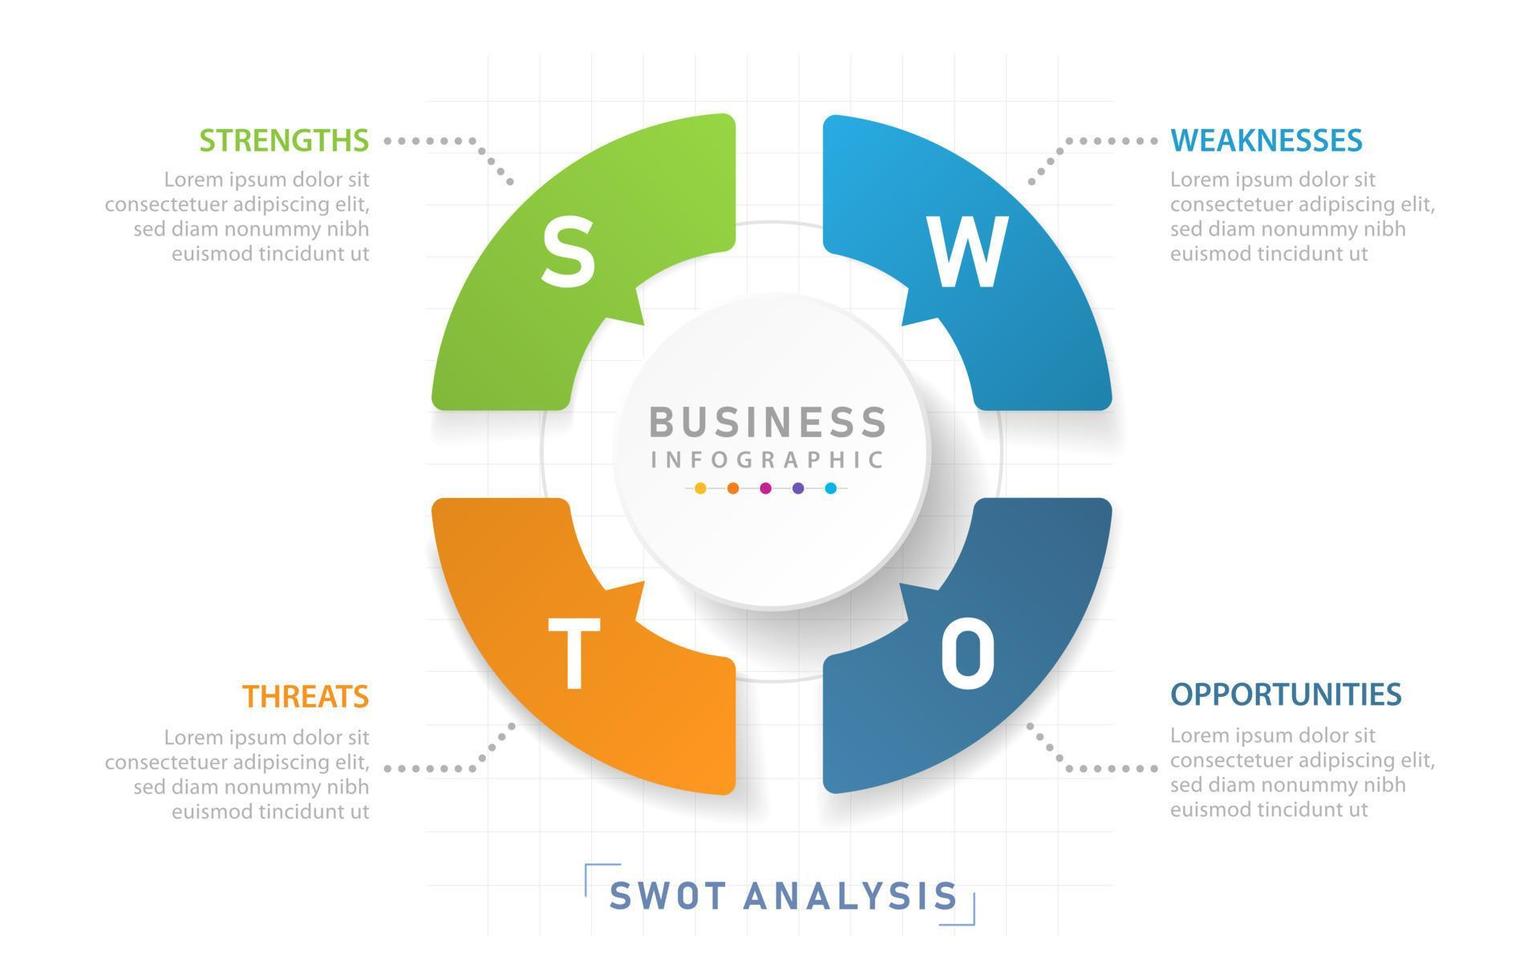 diagrama FODA para negocios, estilo moderno con fortalezas, debilidades, oportunidades y amenazas. infografía vectorial de presentación. vector